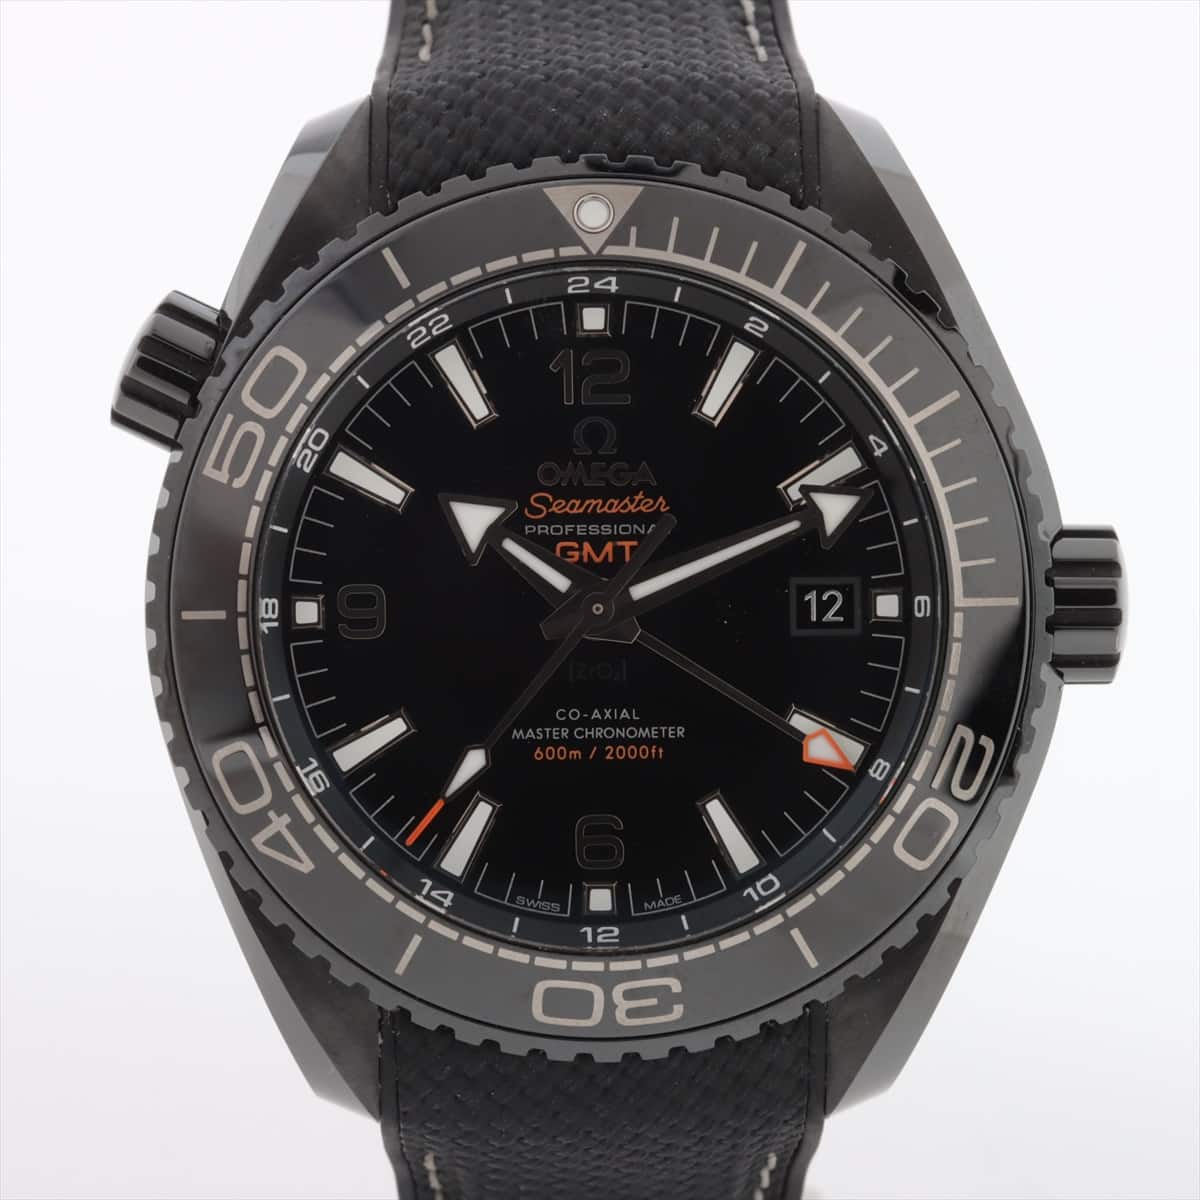 [Chrono] Omega Seamaster Planet Ocean 600M Coaxial Master chronometer GMT Deep black 215.92.46.22.01.001 CE x rubber AT Black-Face